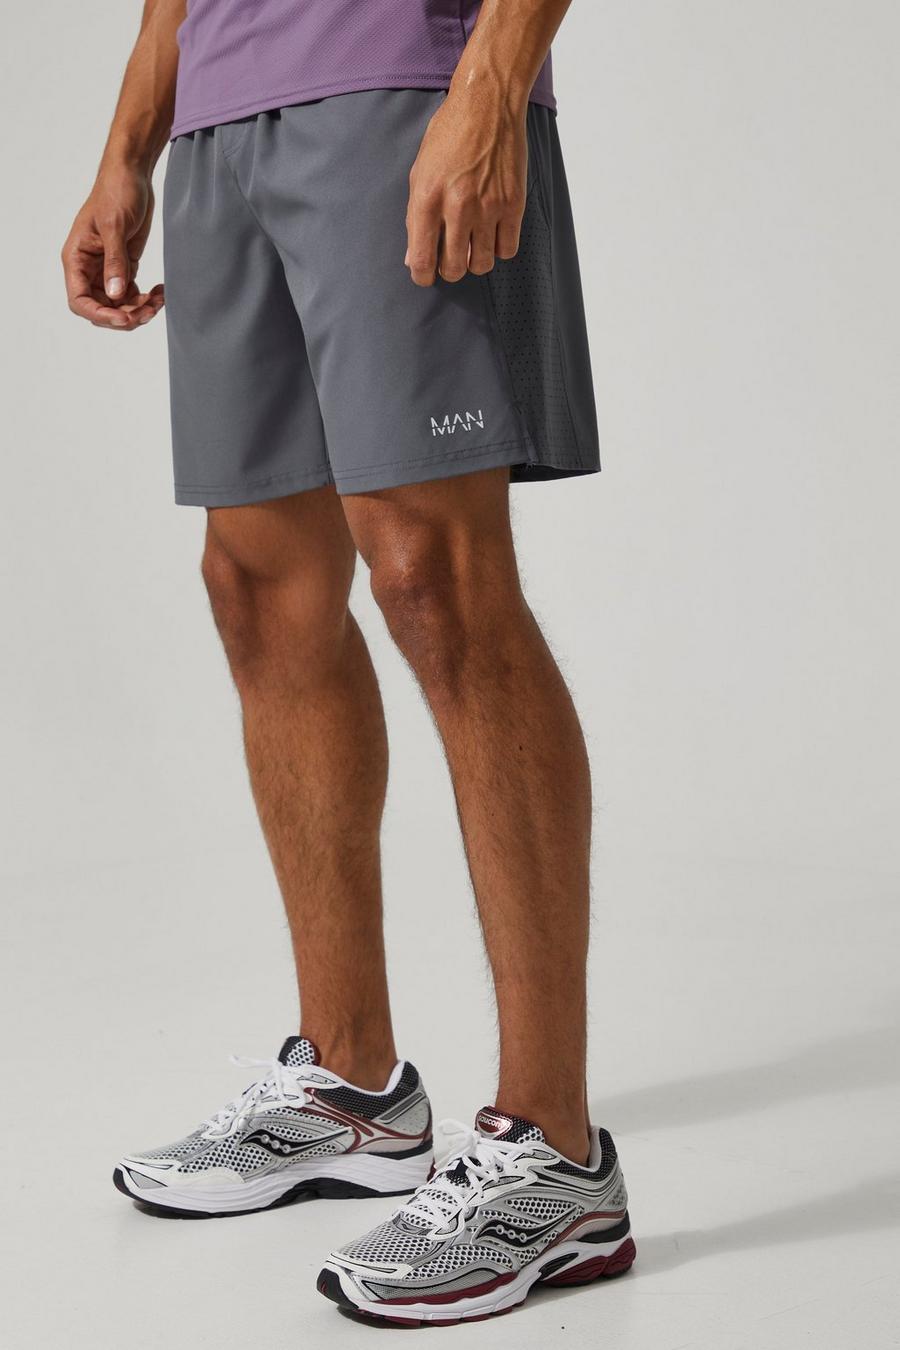 Man Active Mesh-Shorts, Charcoal image number 1